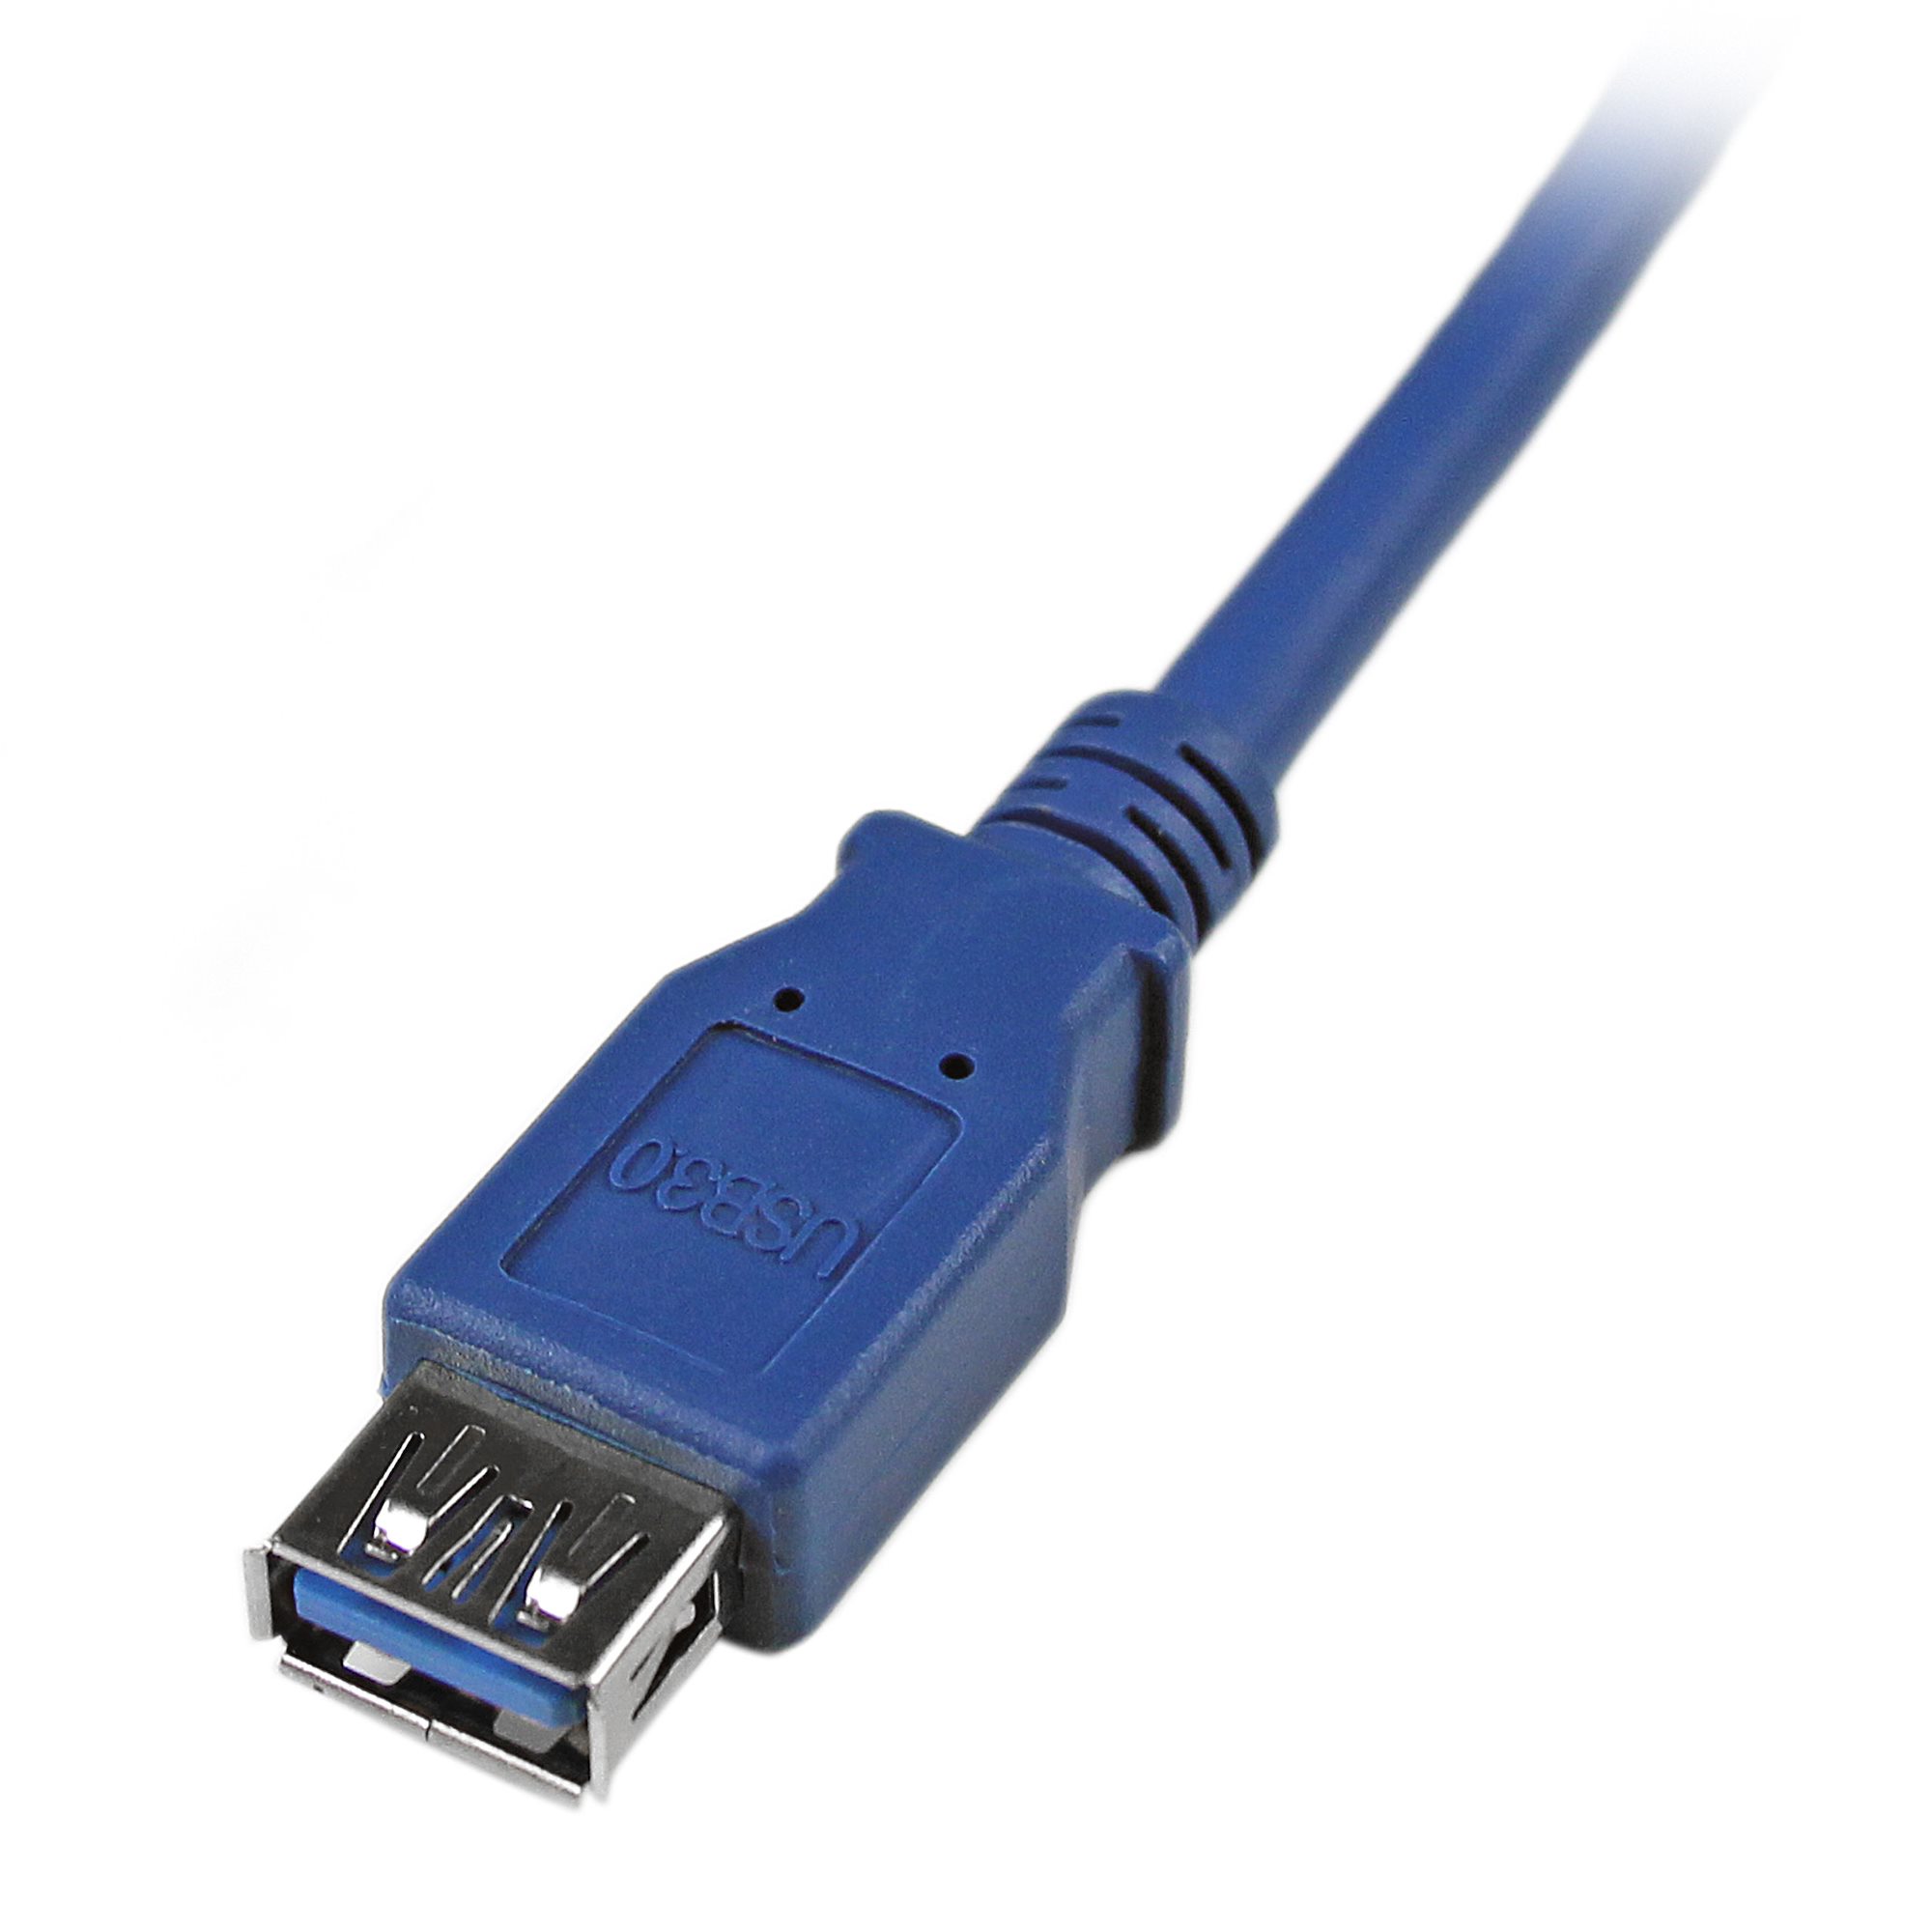 Cable de extensión USB 3.0 A macho a hembra de 3 pies